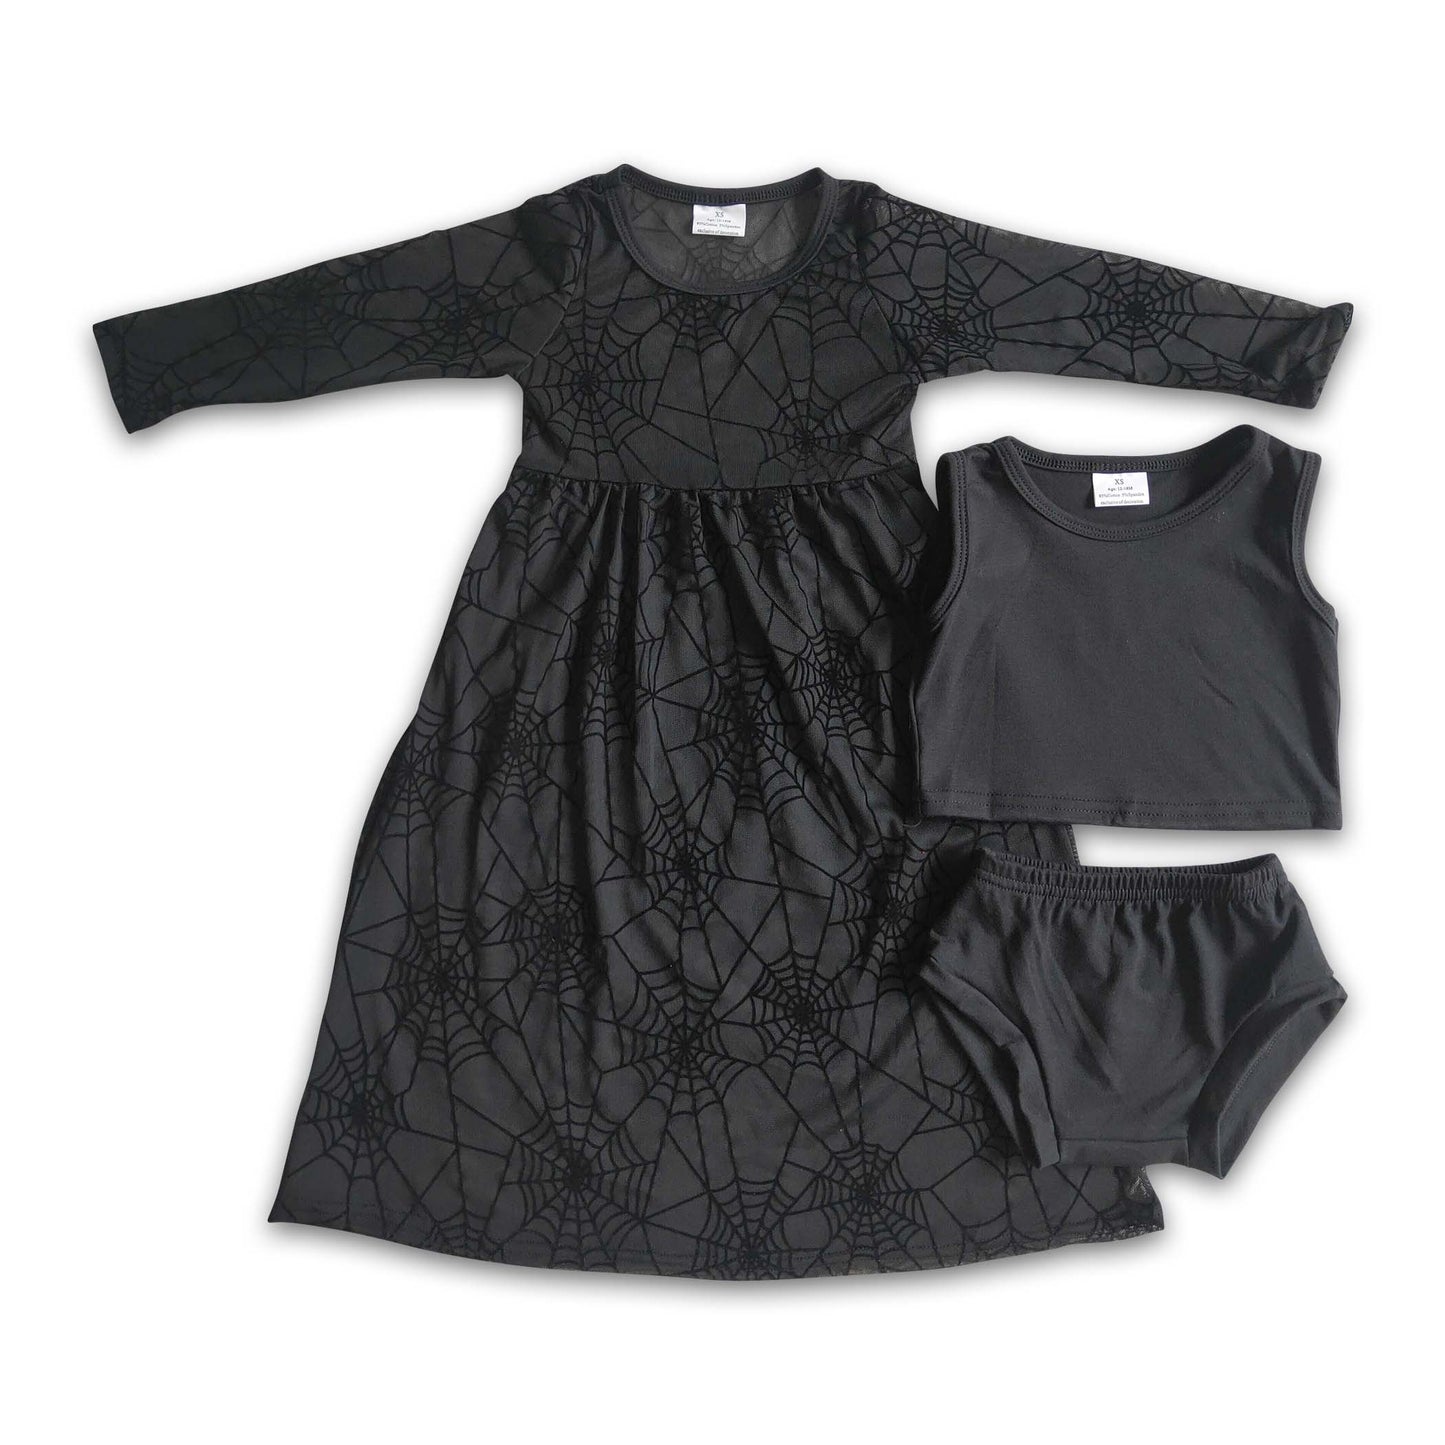 Black bummies set match spiderweb maxi dress baby girls Halloween set